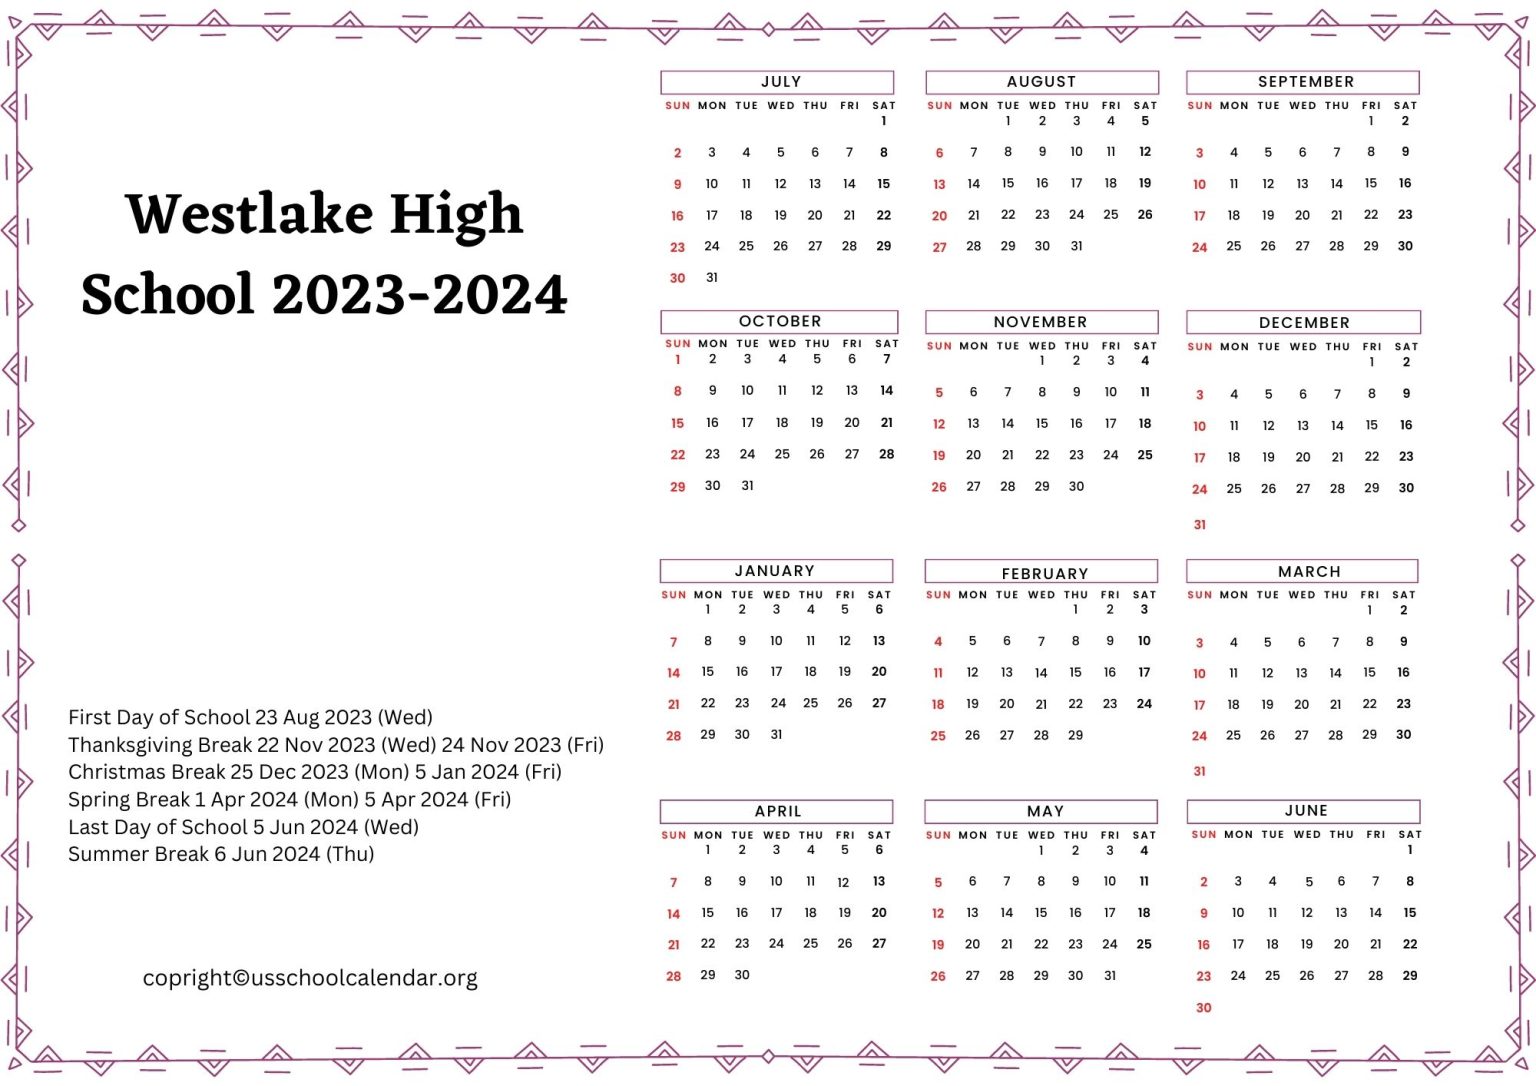 westlake-high-school-calendar-with-holidays-2023-2024